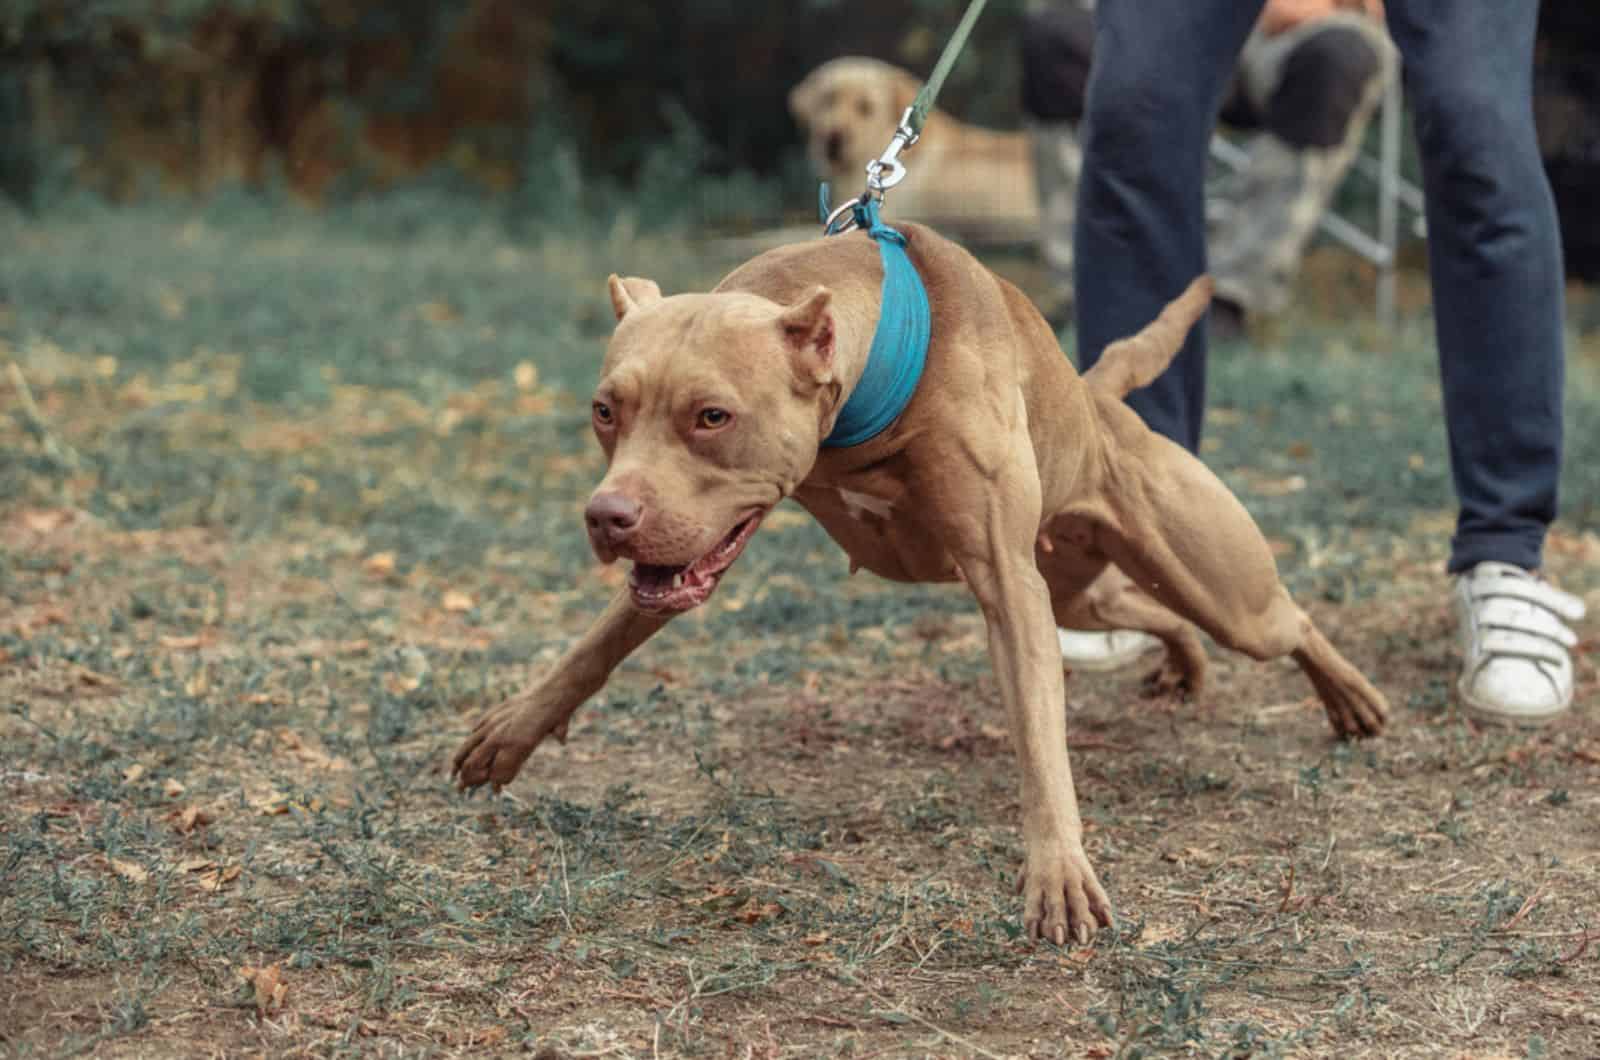 american pitbull terrier on a leash barking